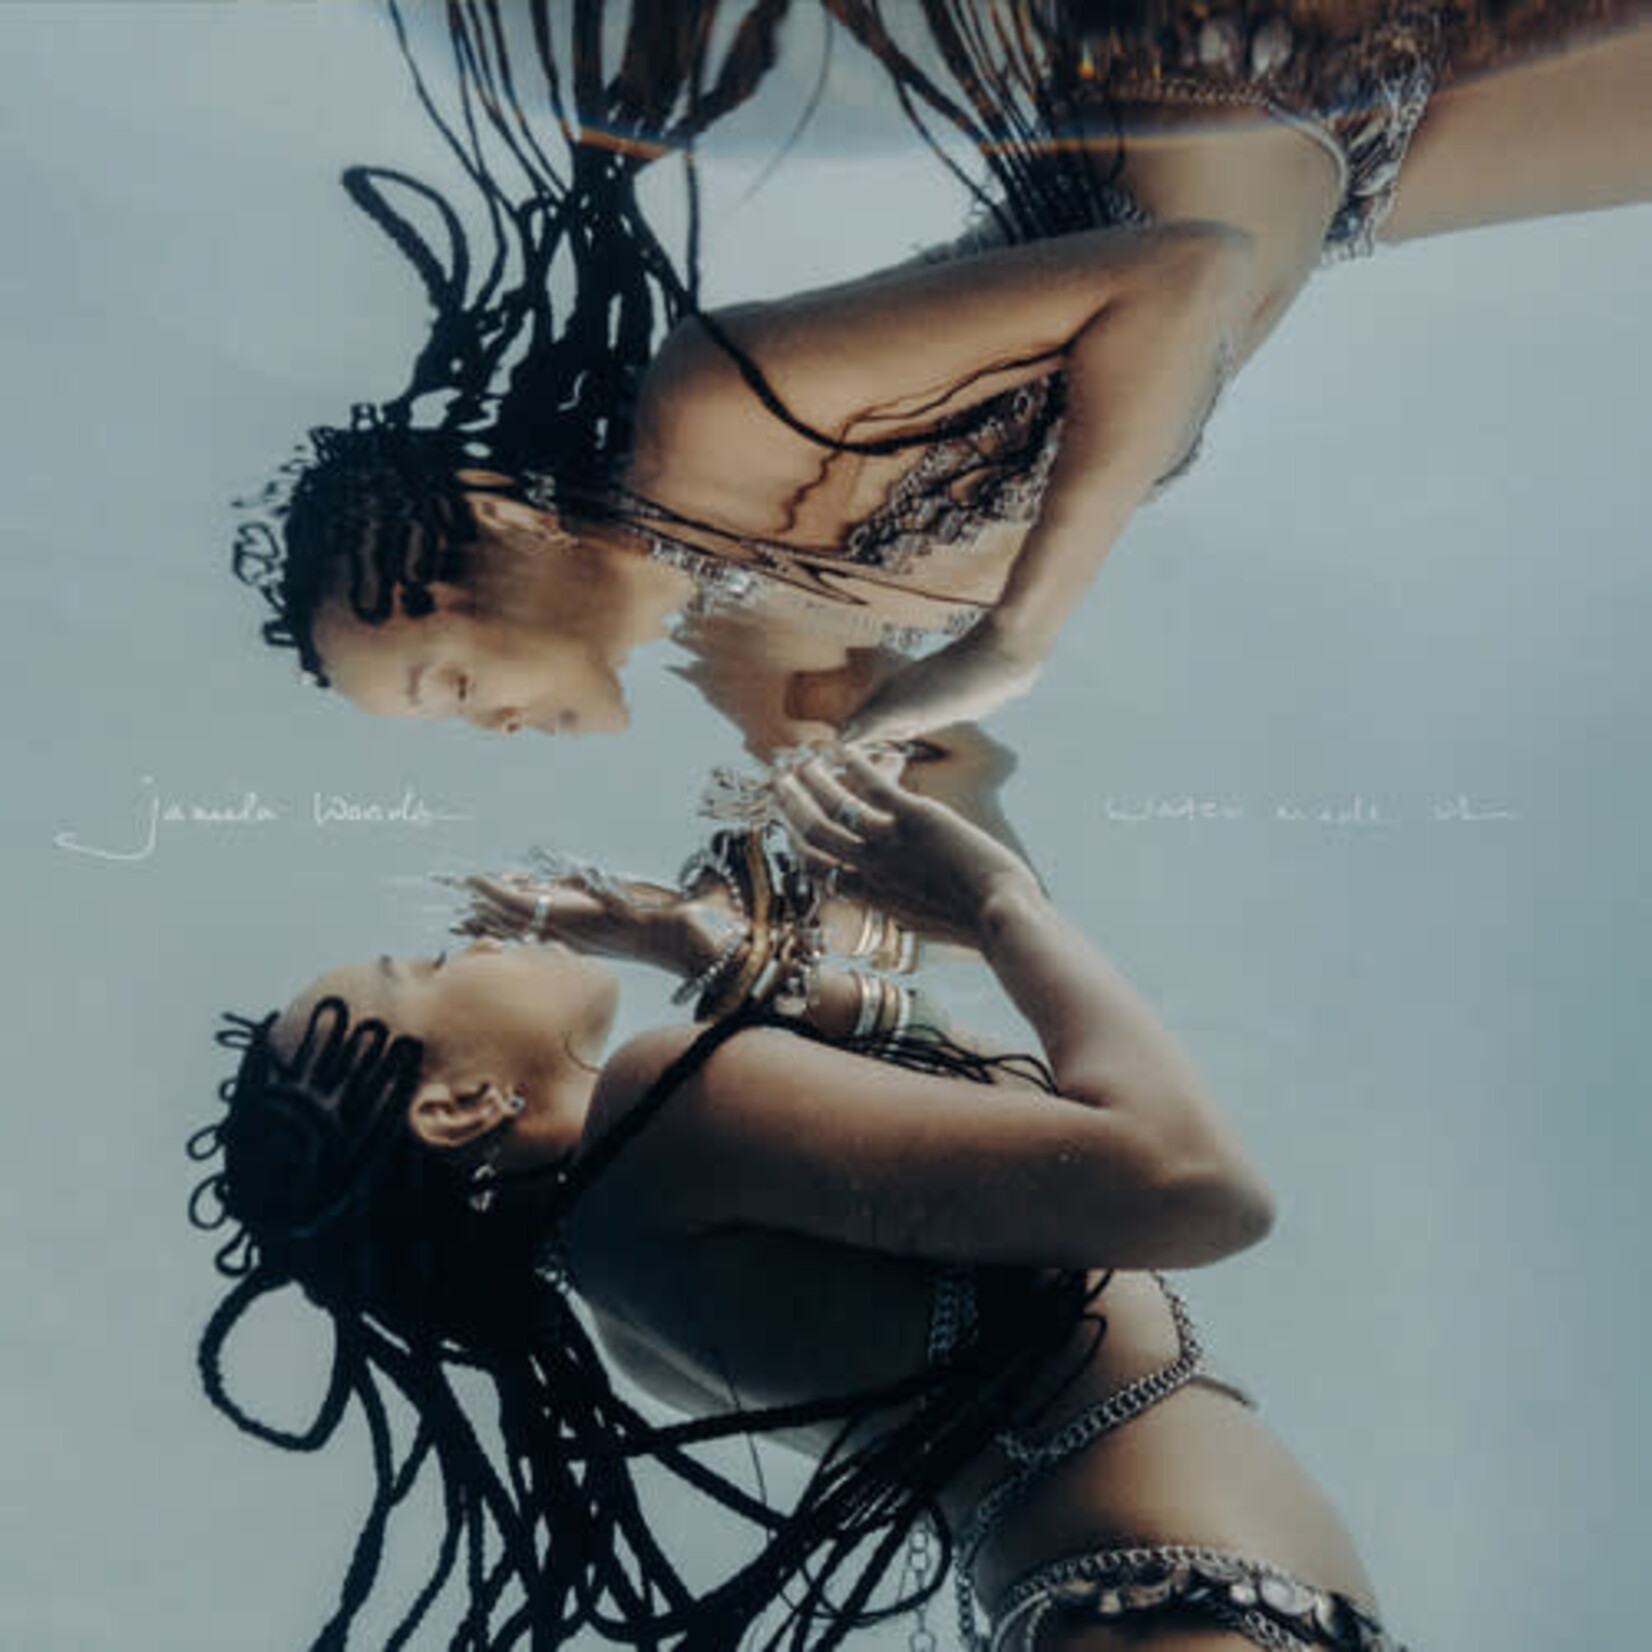 [New] Jamila Woods - Water Made Us (black vinyl)